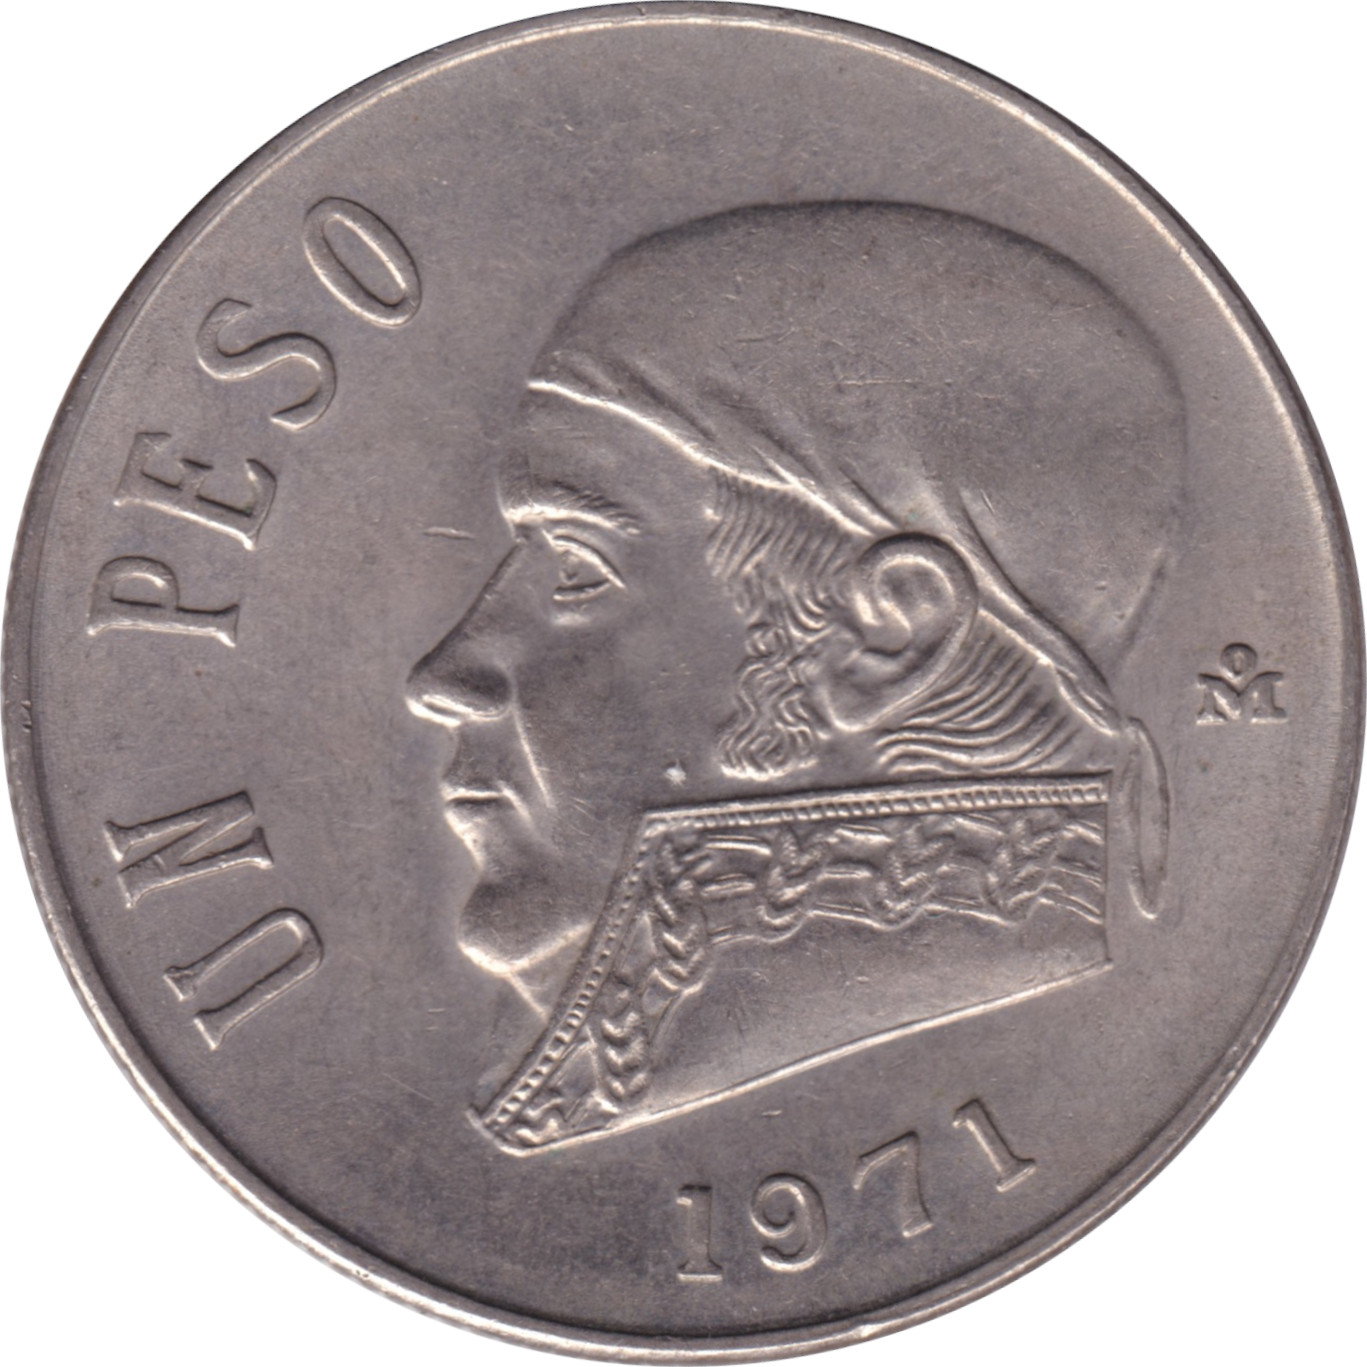 1 peso - Hidalgo - Tête de profil à gauche